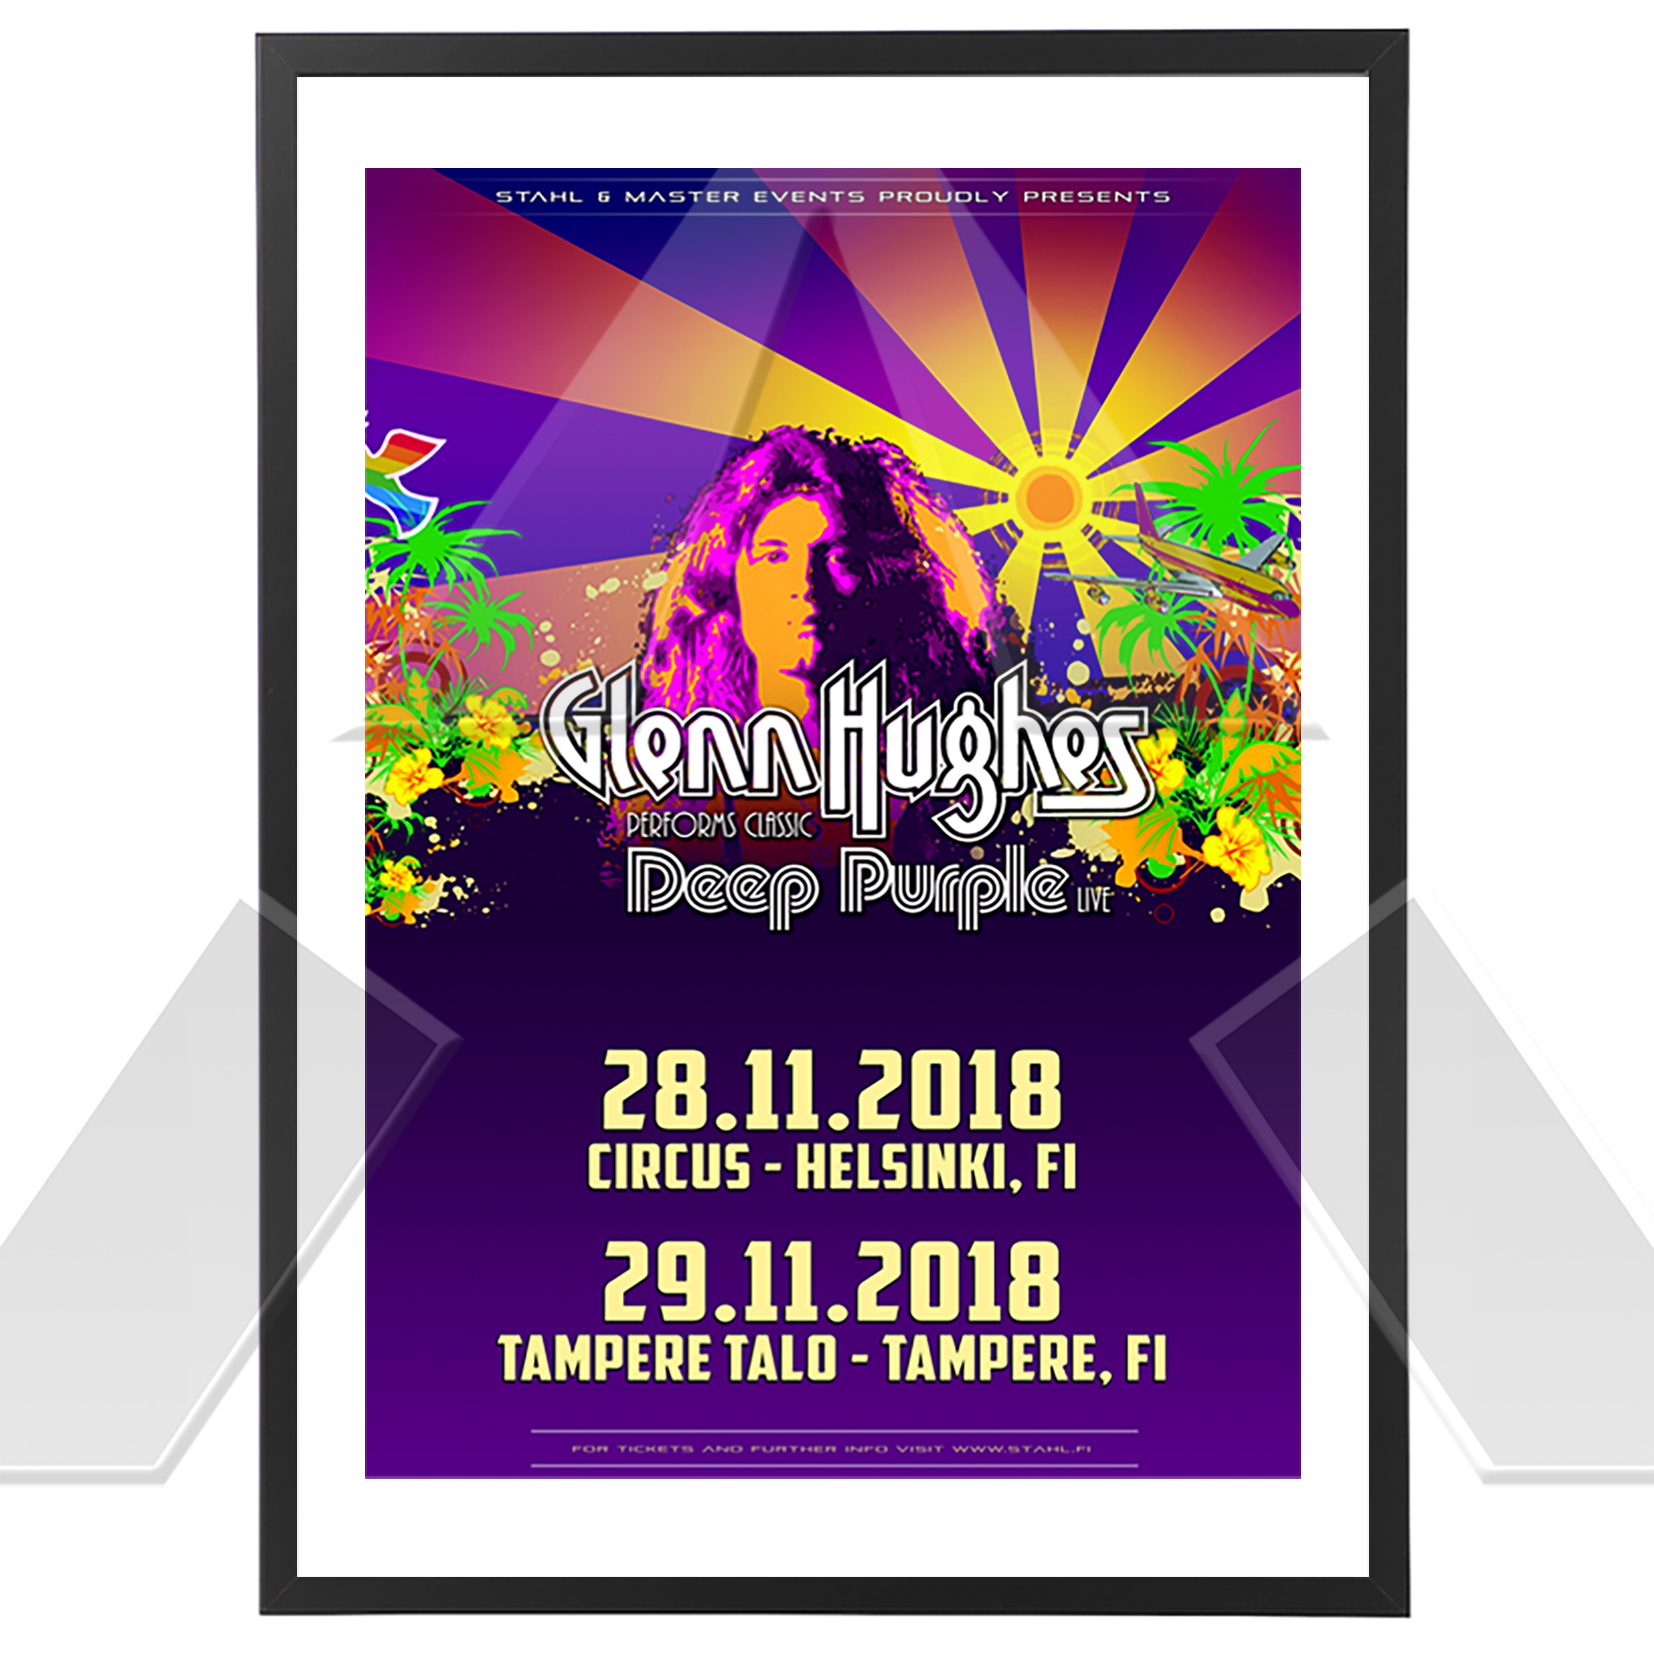 Glenn Hughes ★ Perform Classic Deep Purple Tour 2019 (tour poster)